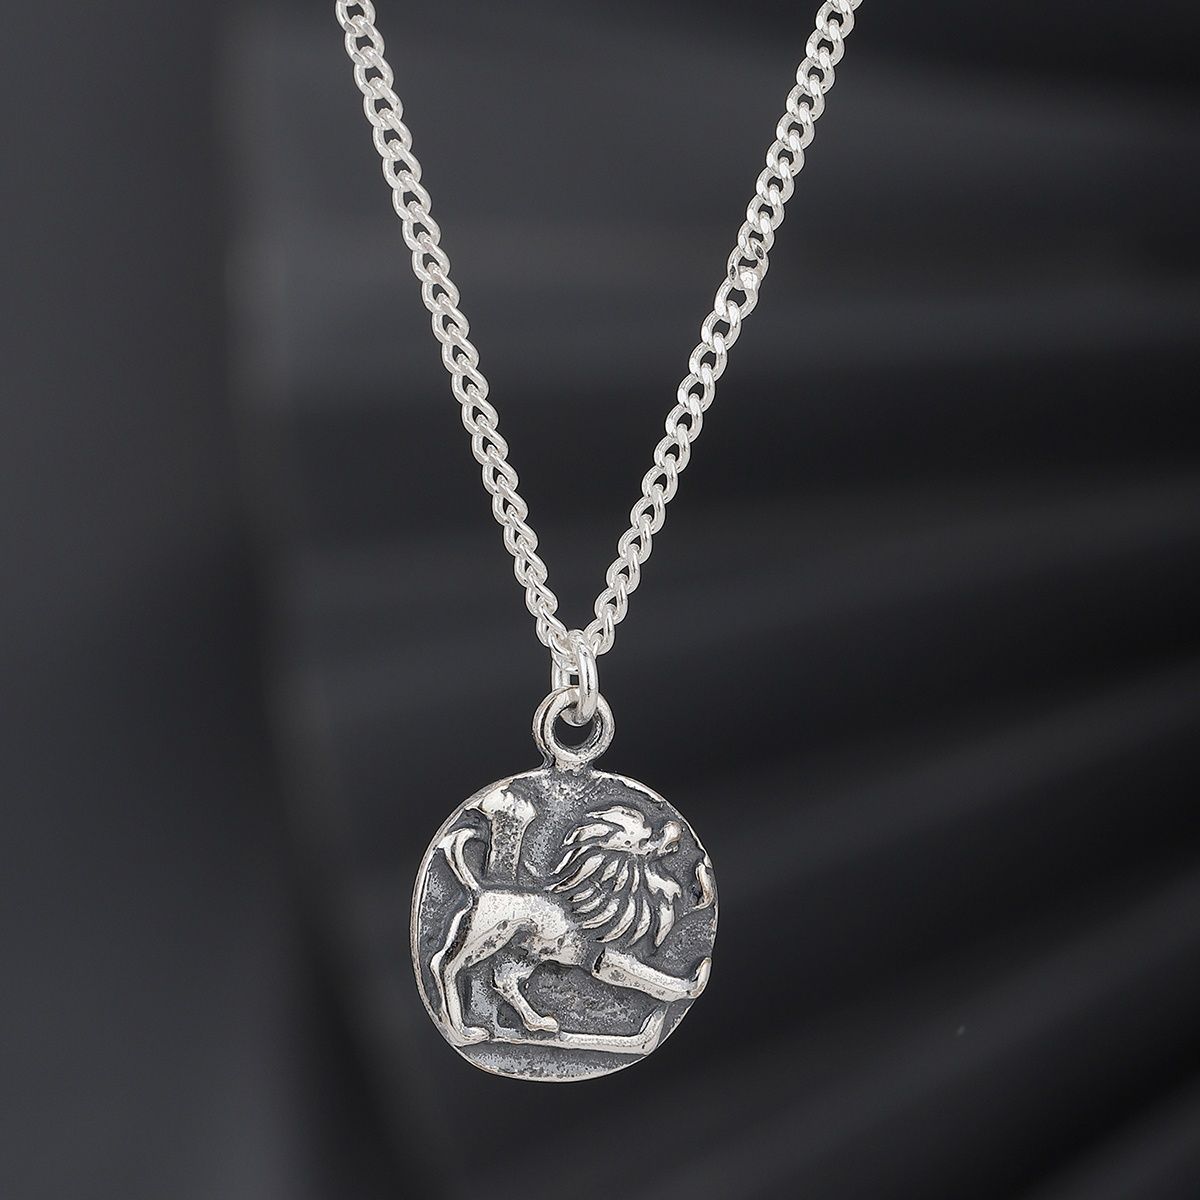 Zodiac Capricorn Necklace in Silver | MYEL Design